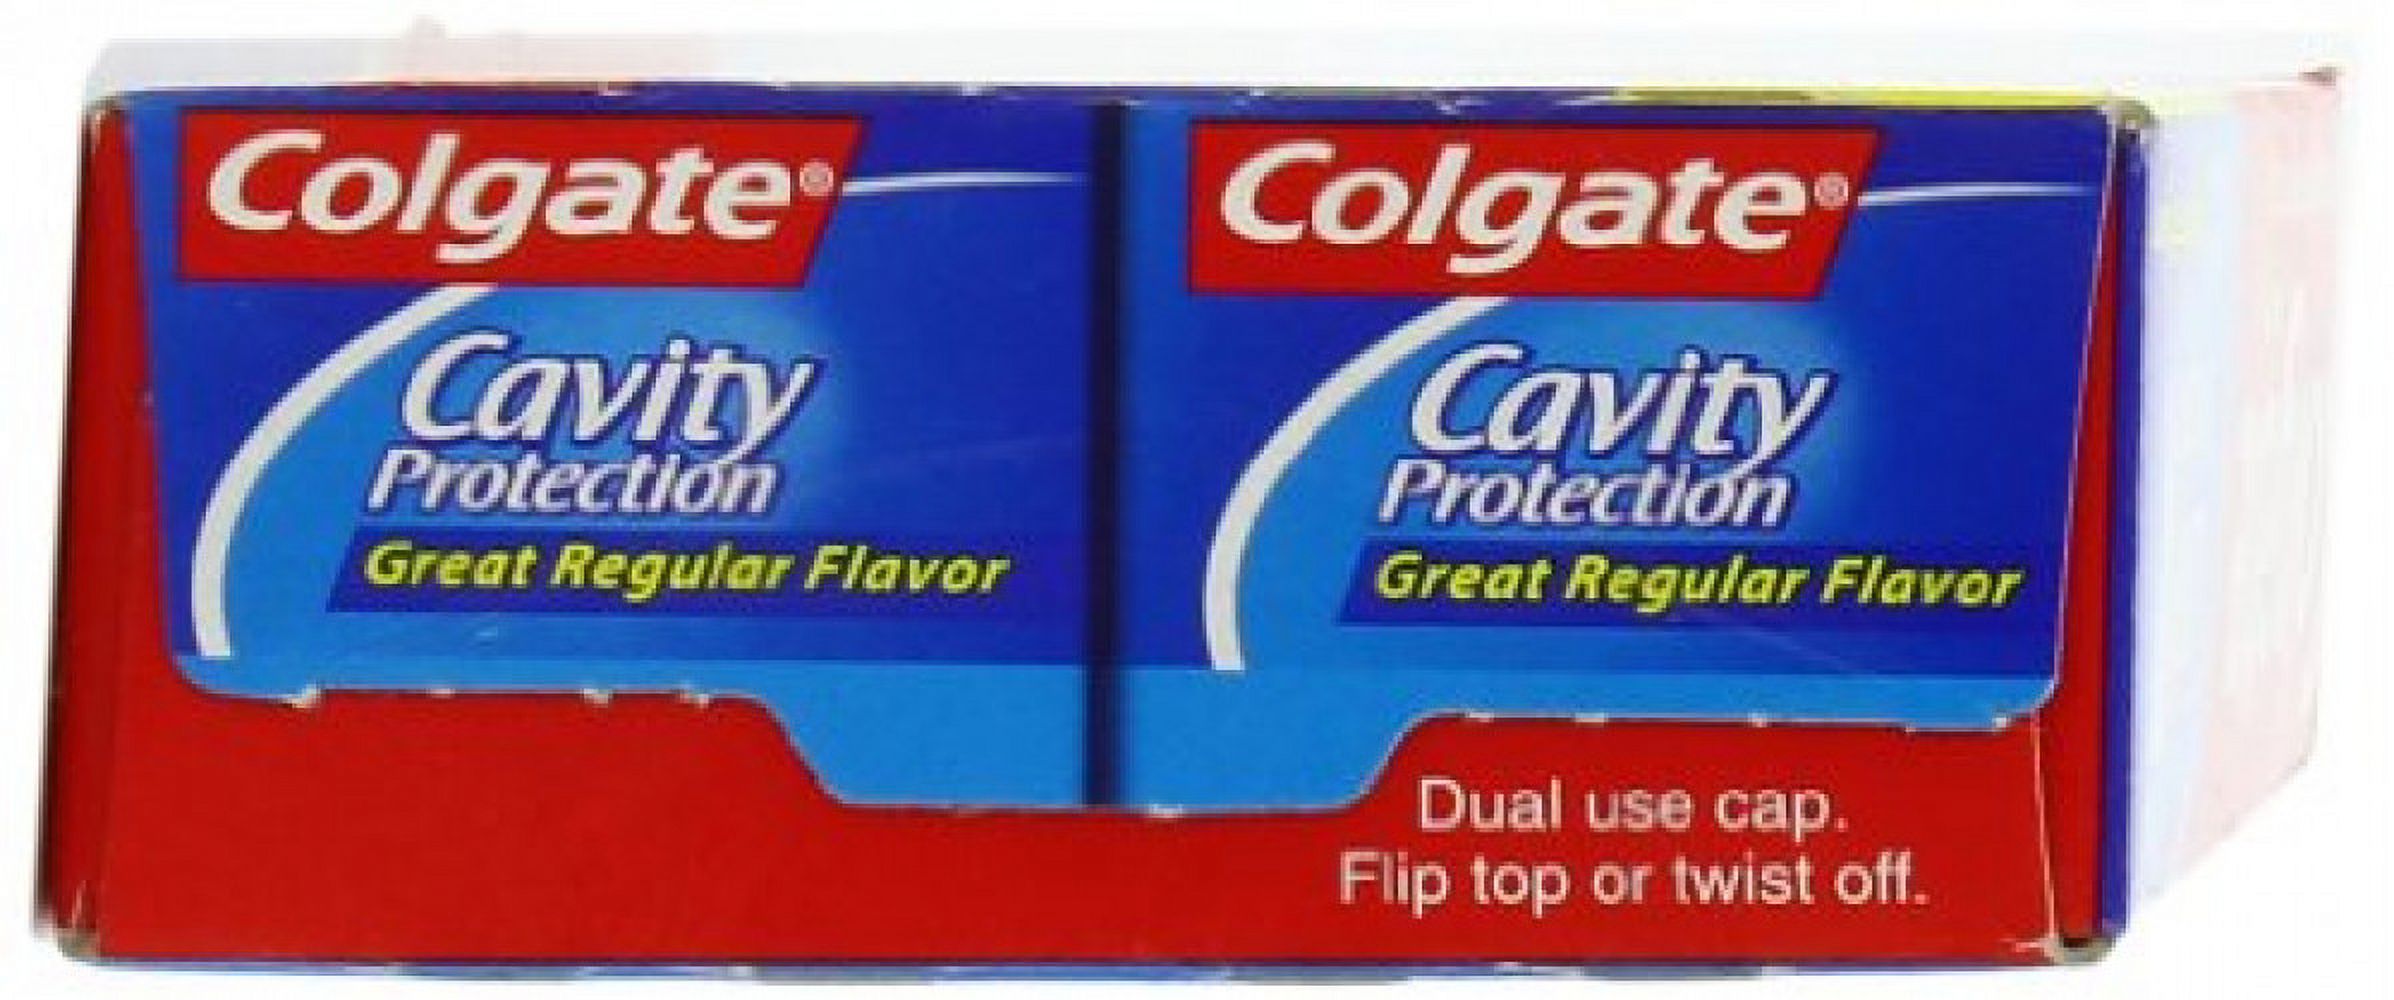 Colgate Cavity Toothpaste 2pk - image 5 of 7